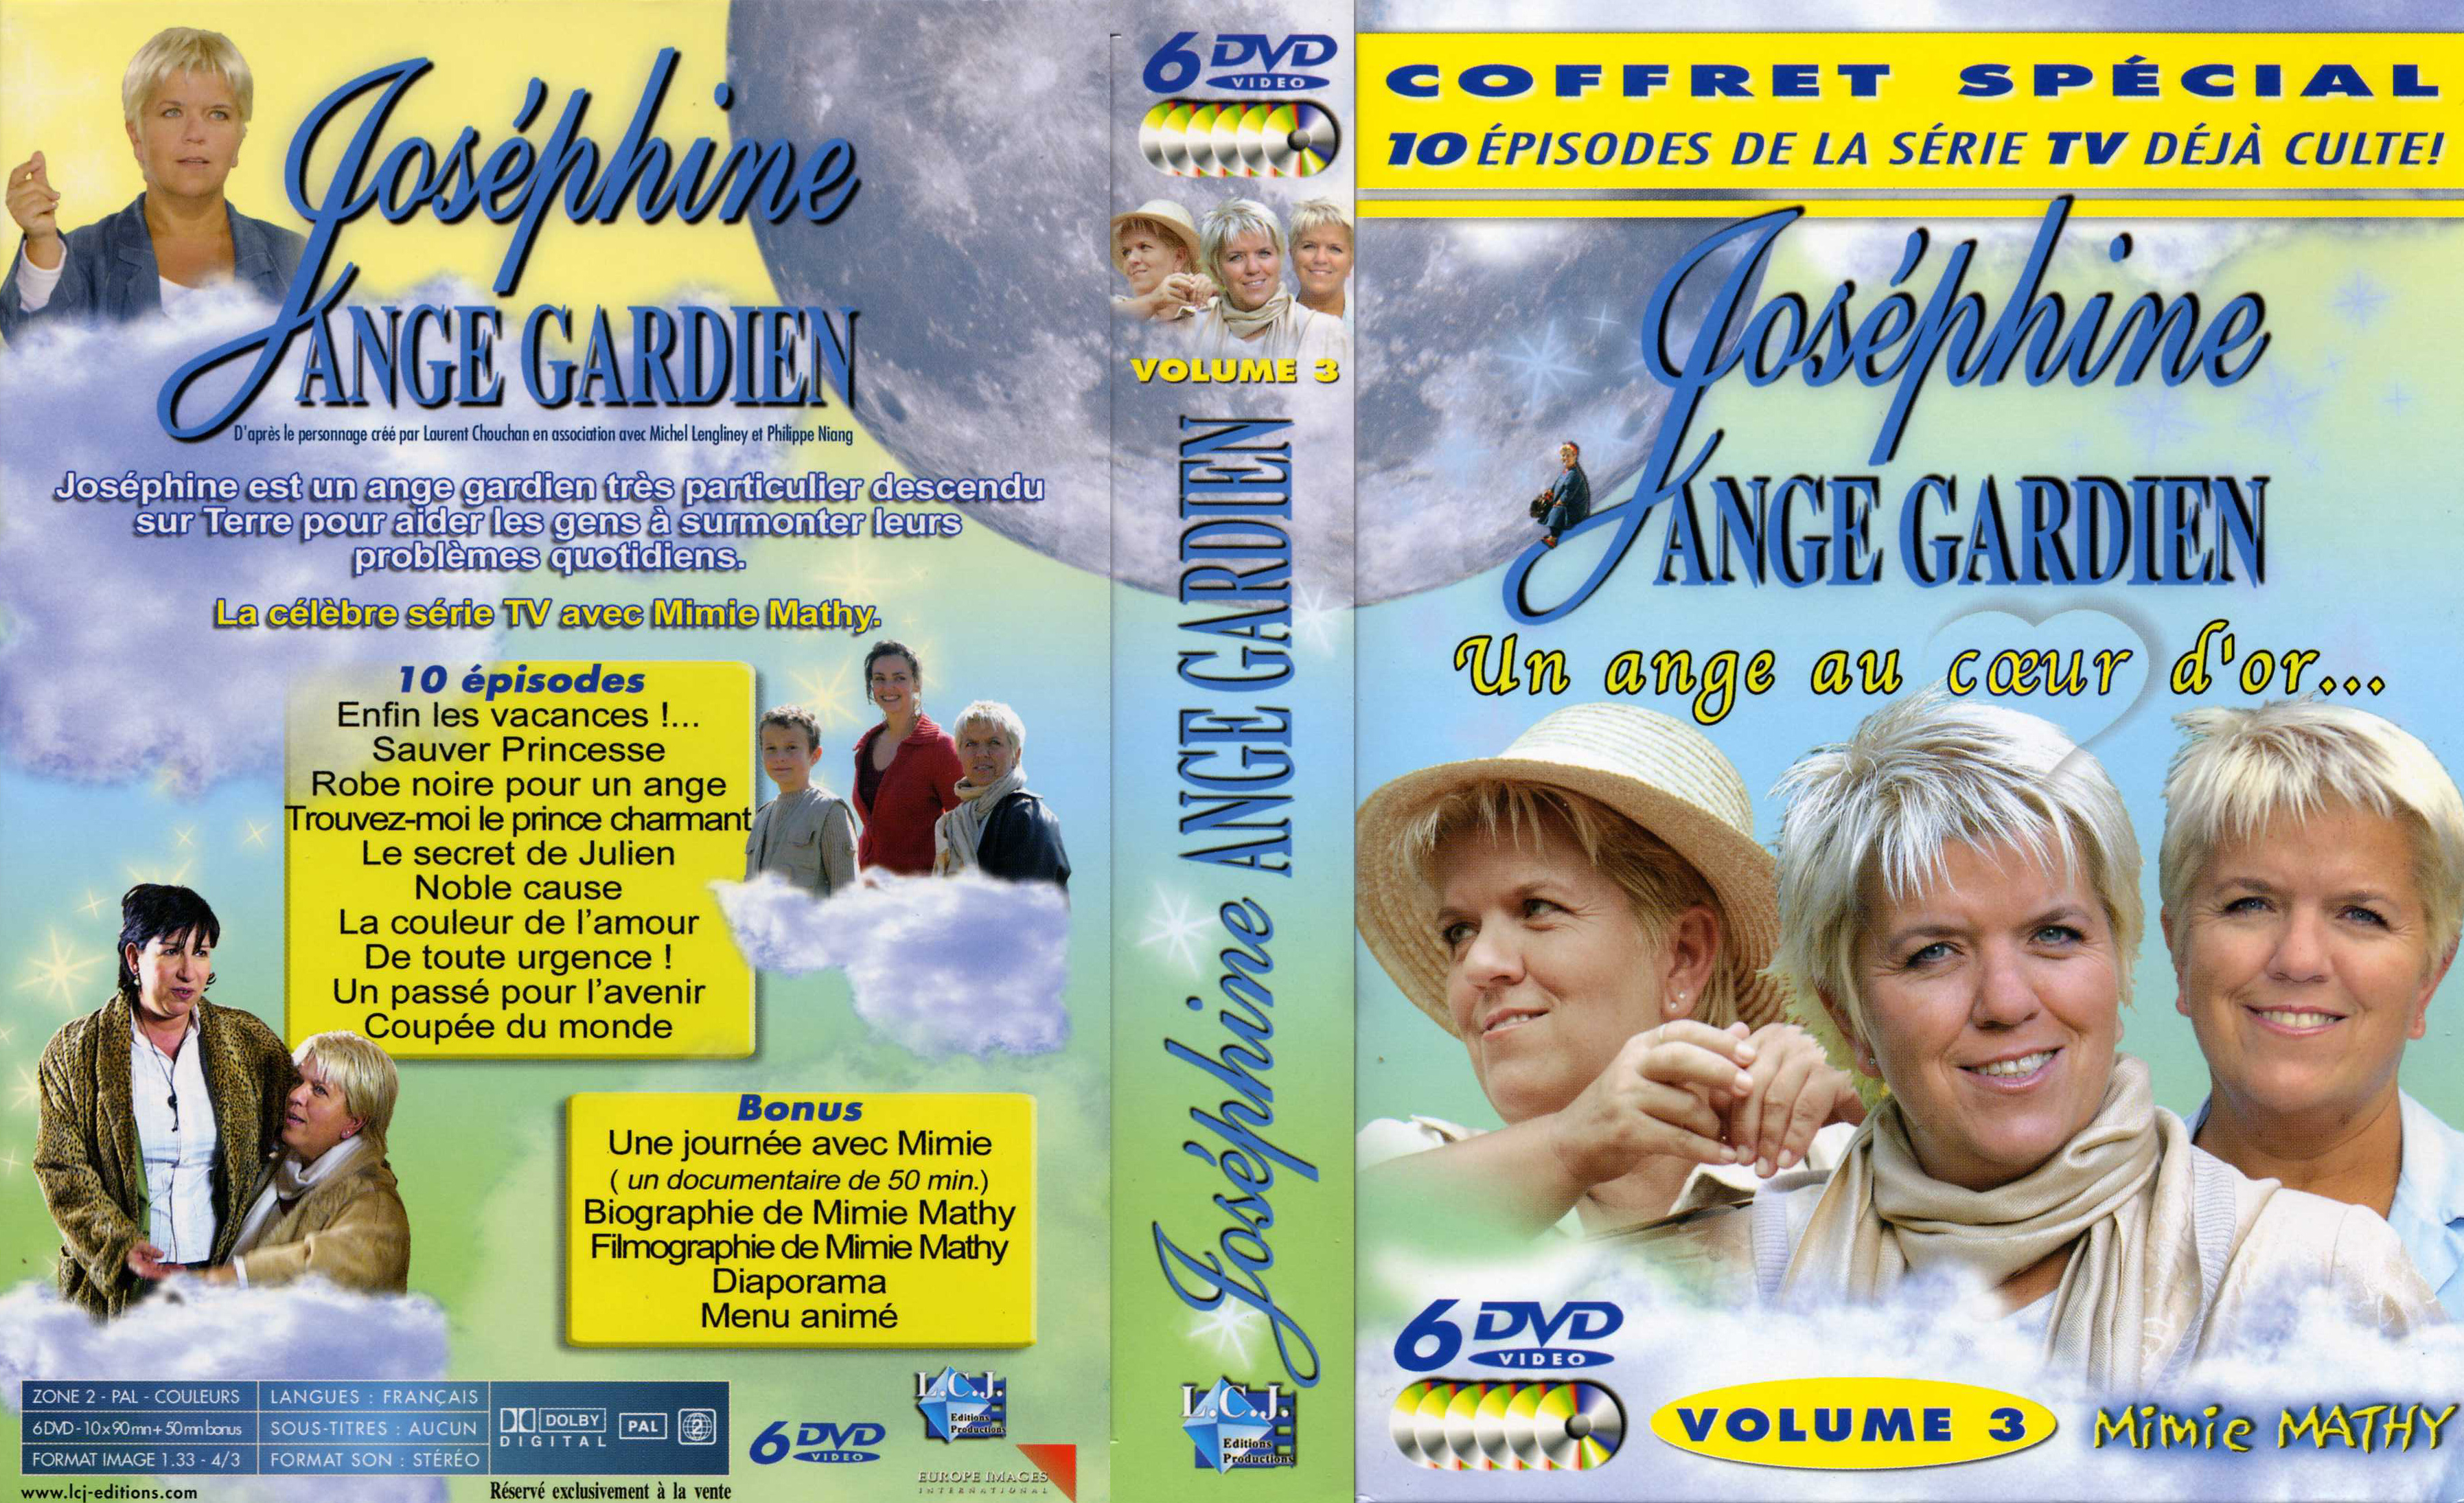 Jaquette DVD Josphine ange gardien COFFRET vol 3